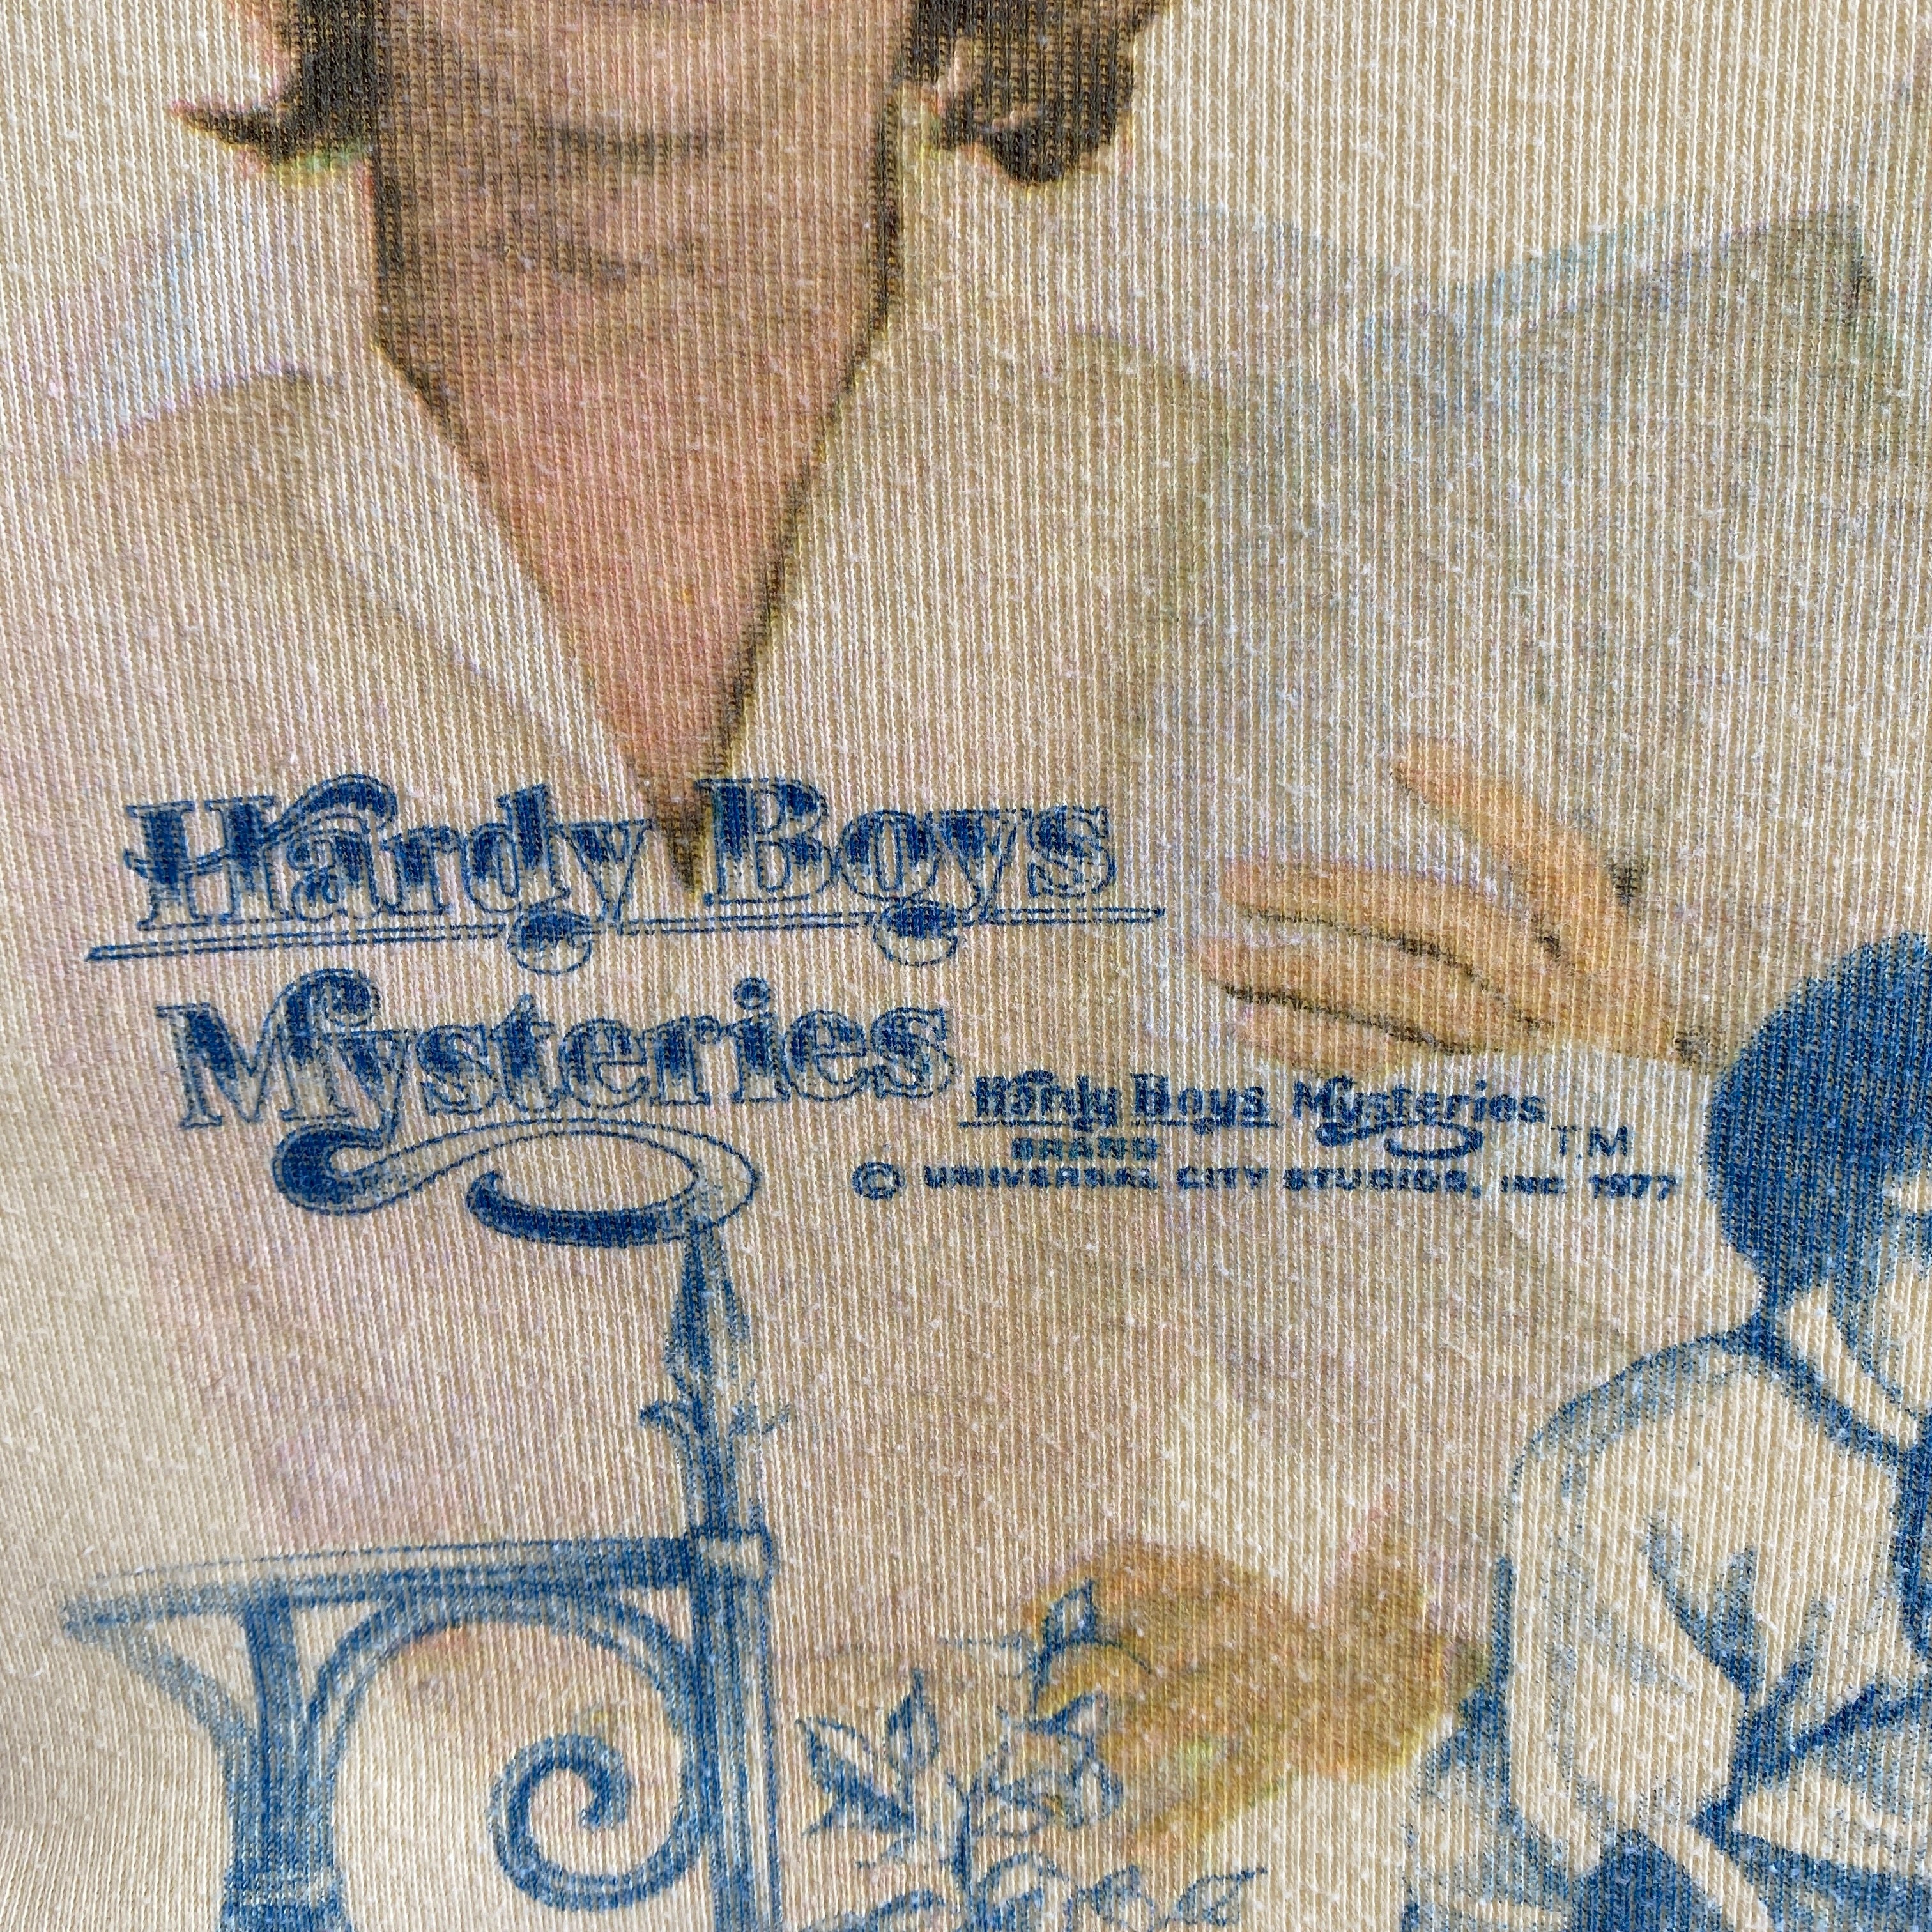 1977 Hardy Boys Graphic Baby Tee